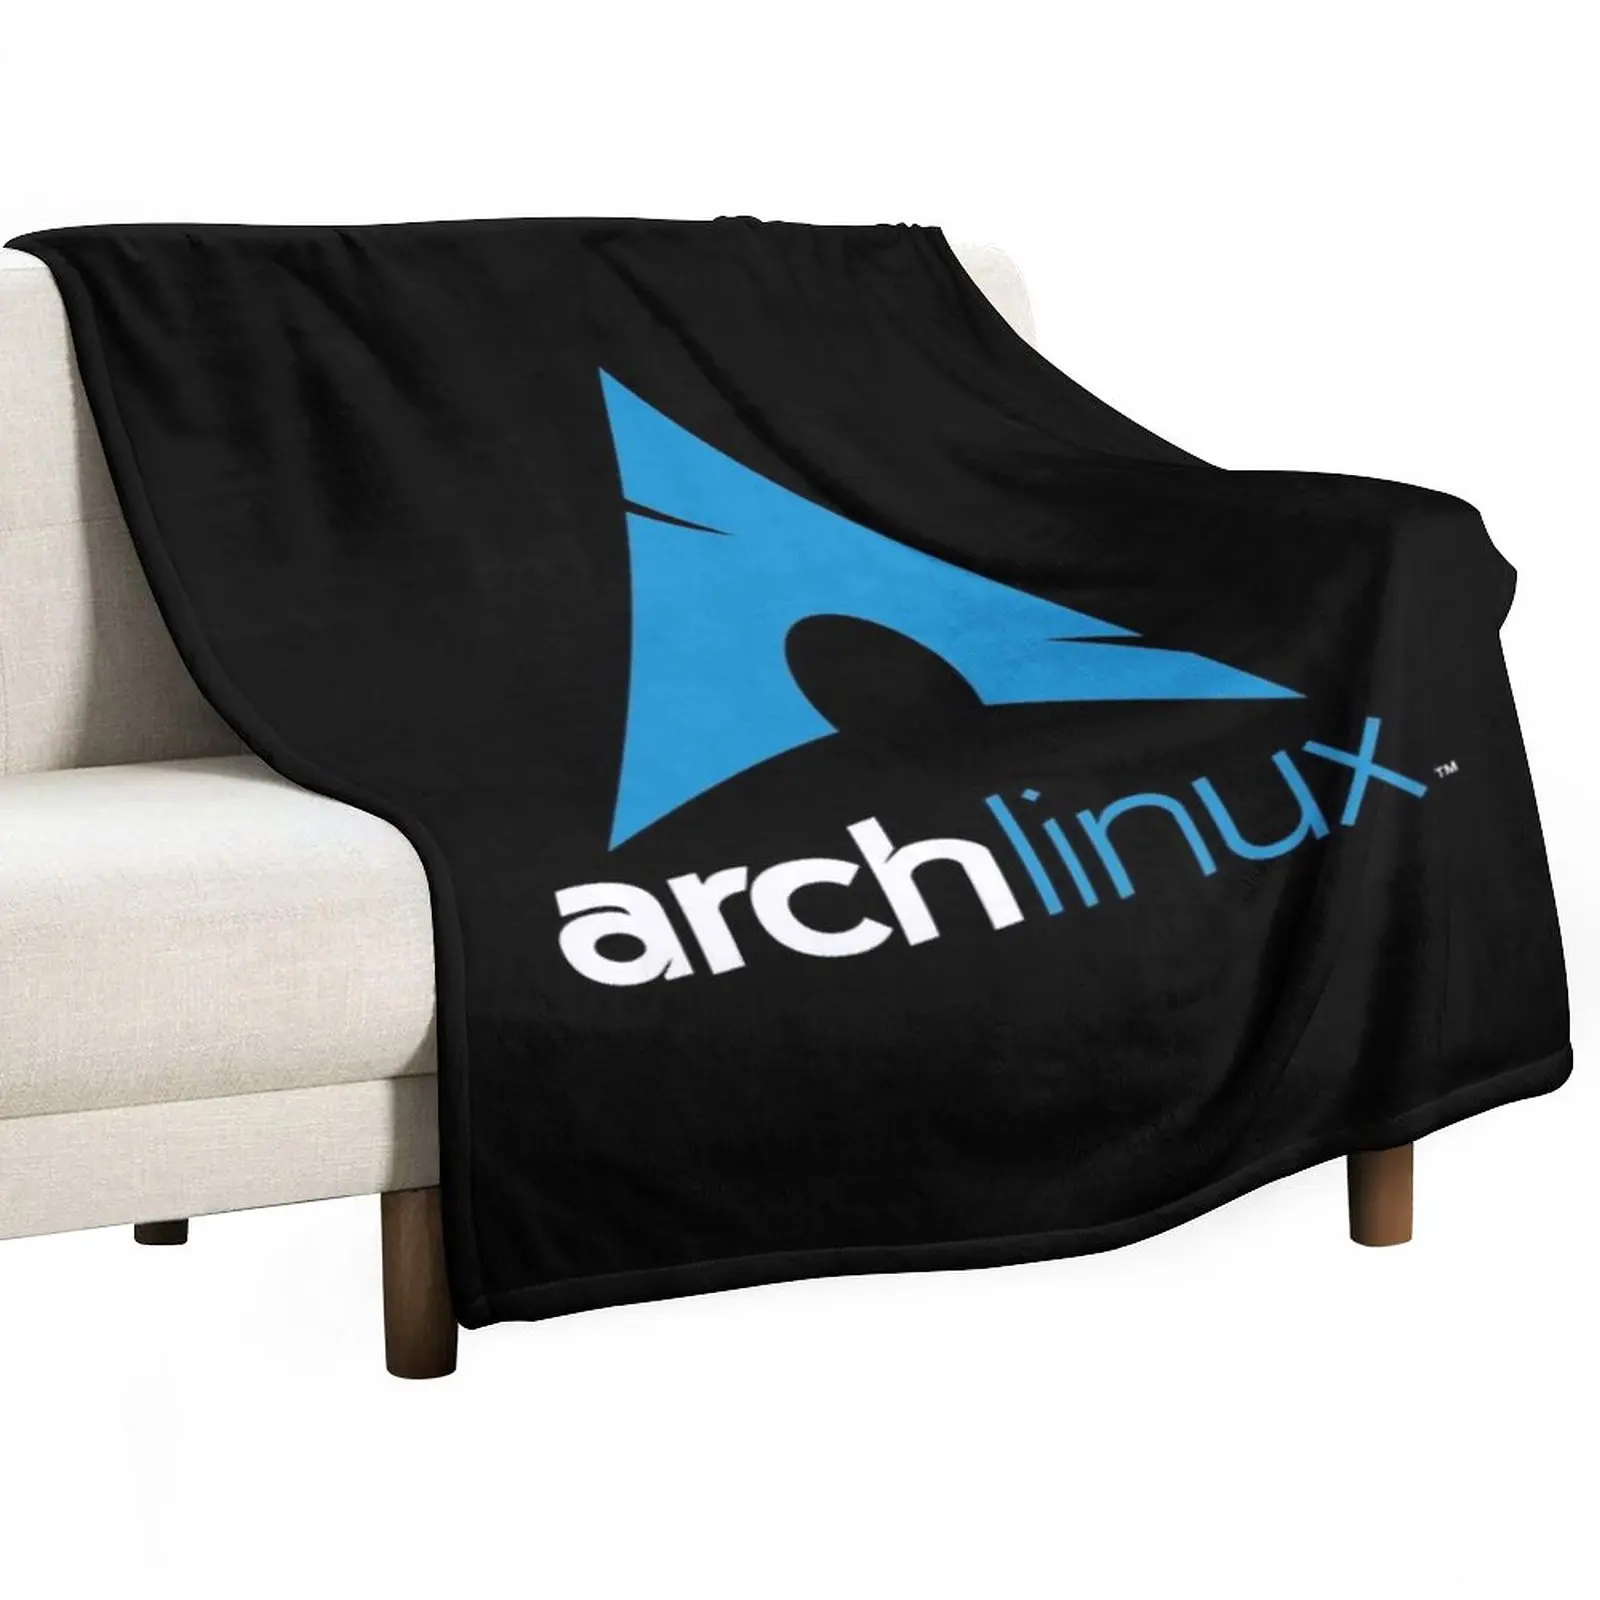 

arch linux Throw Blanket Large Blanket Sofa Blanket Luxury Thicken Blanket Designer Blankets